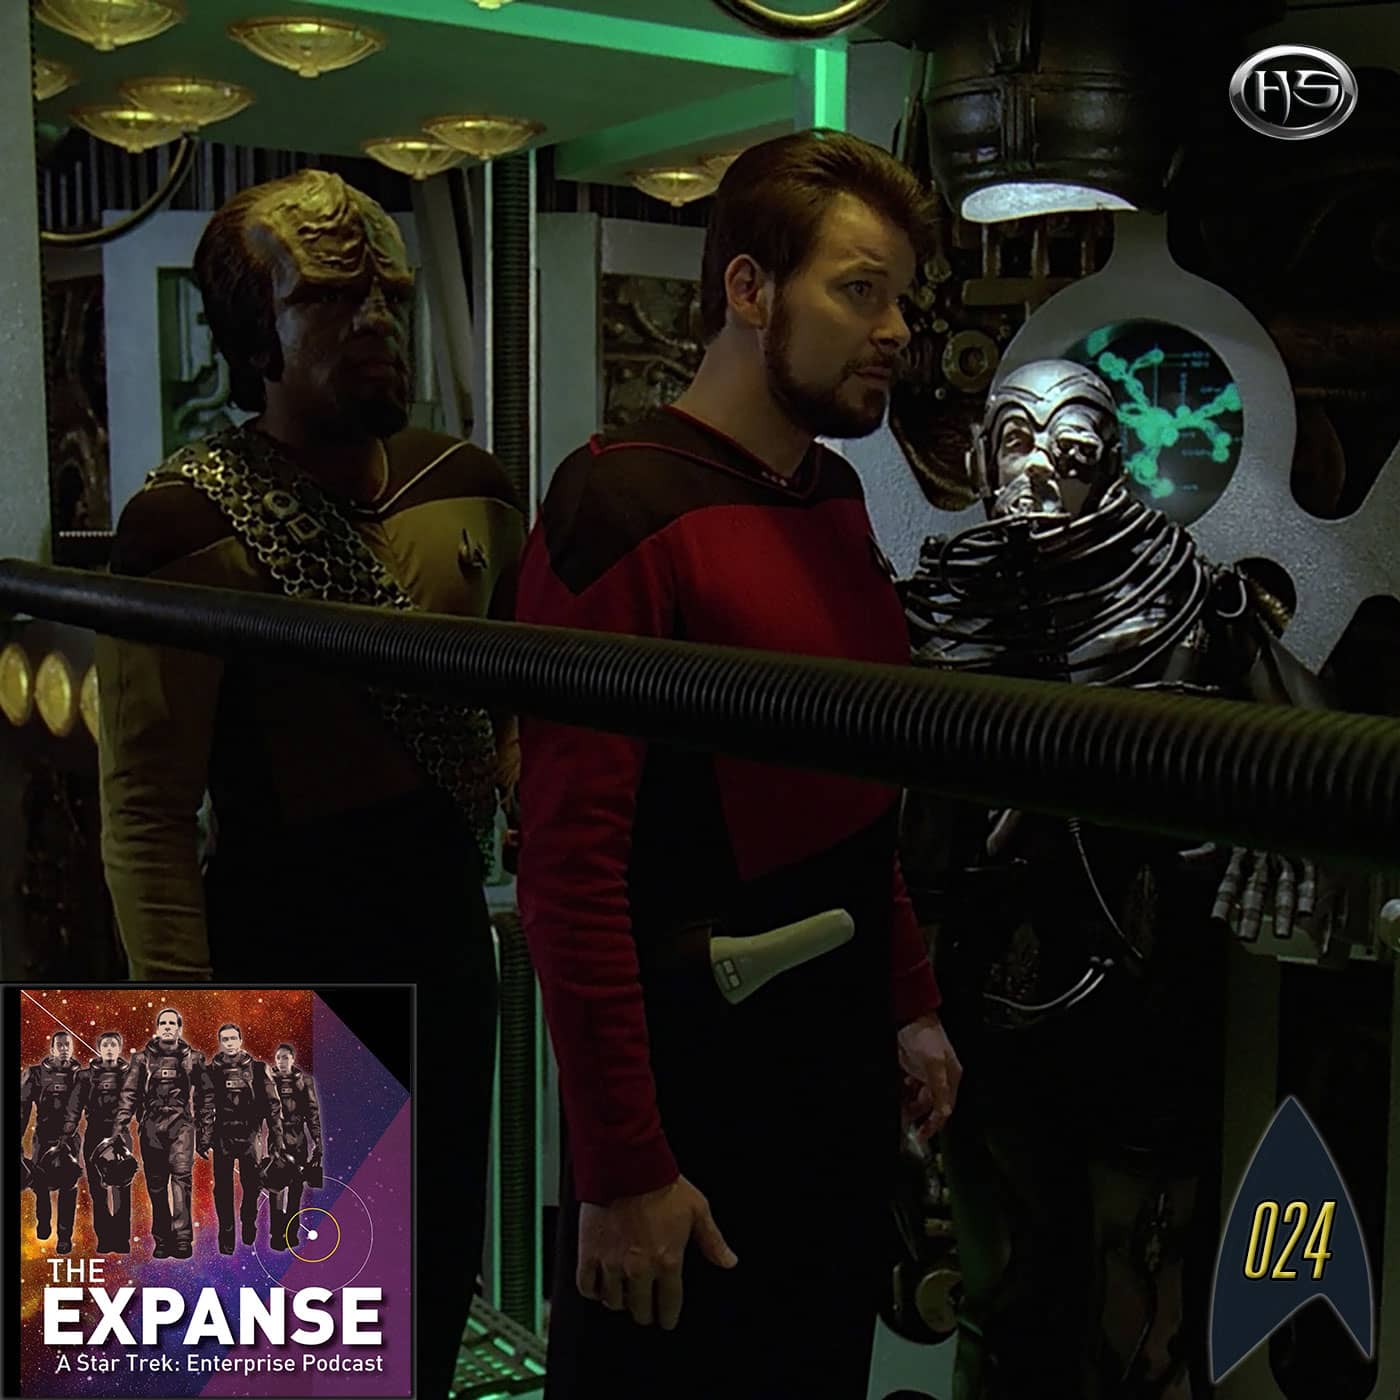 The Expanse Episode 24